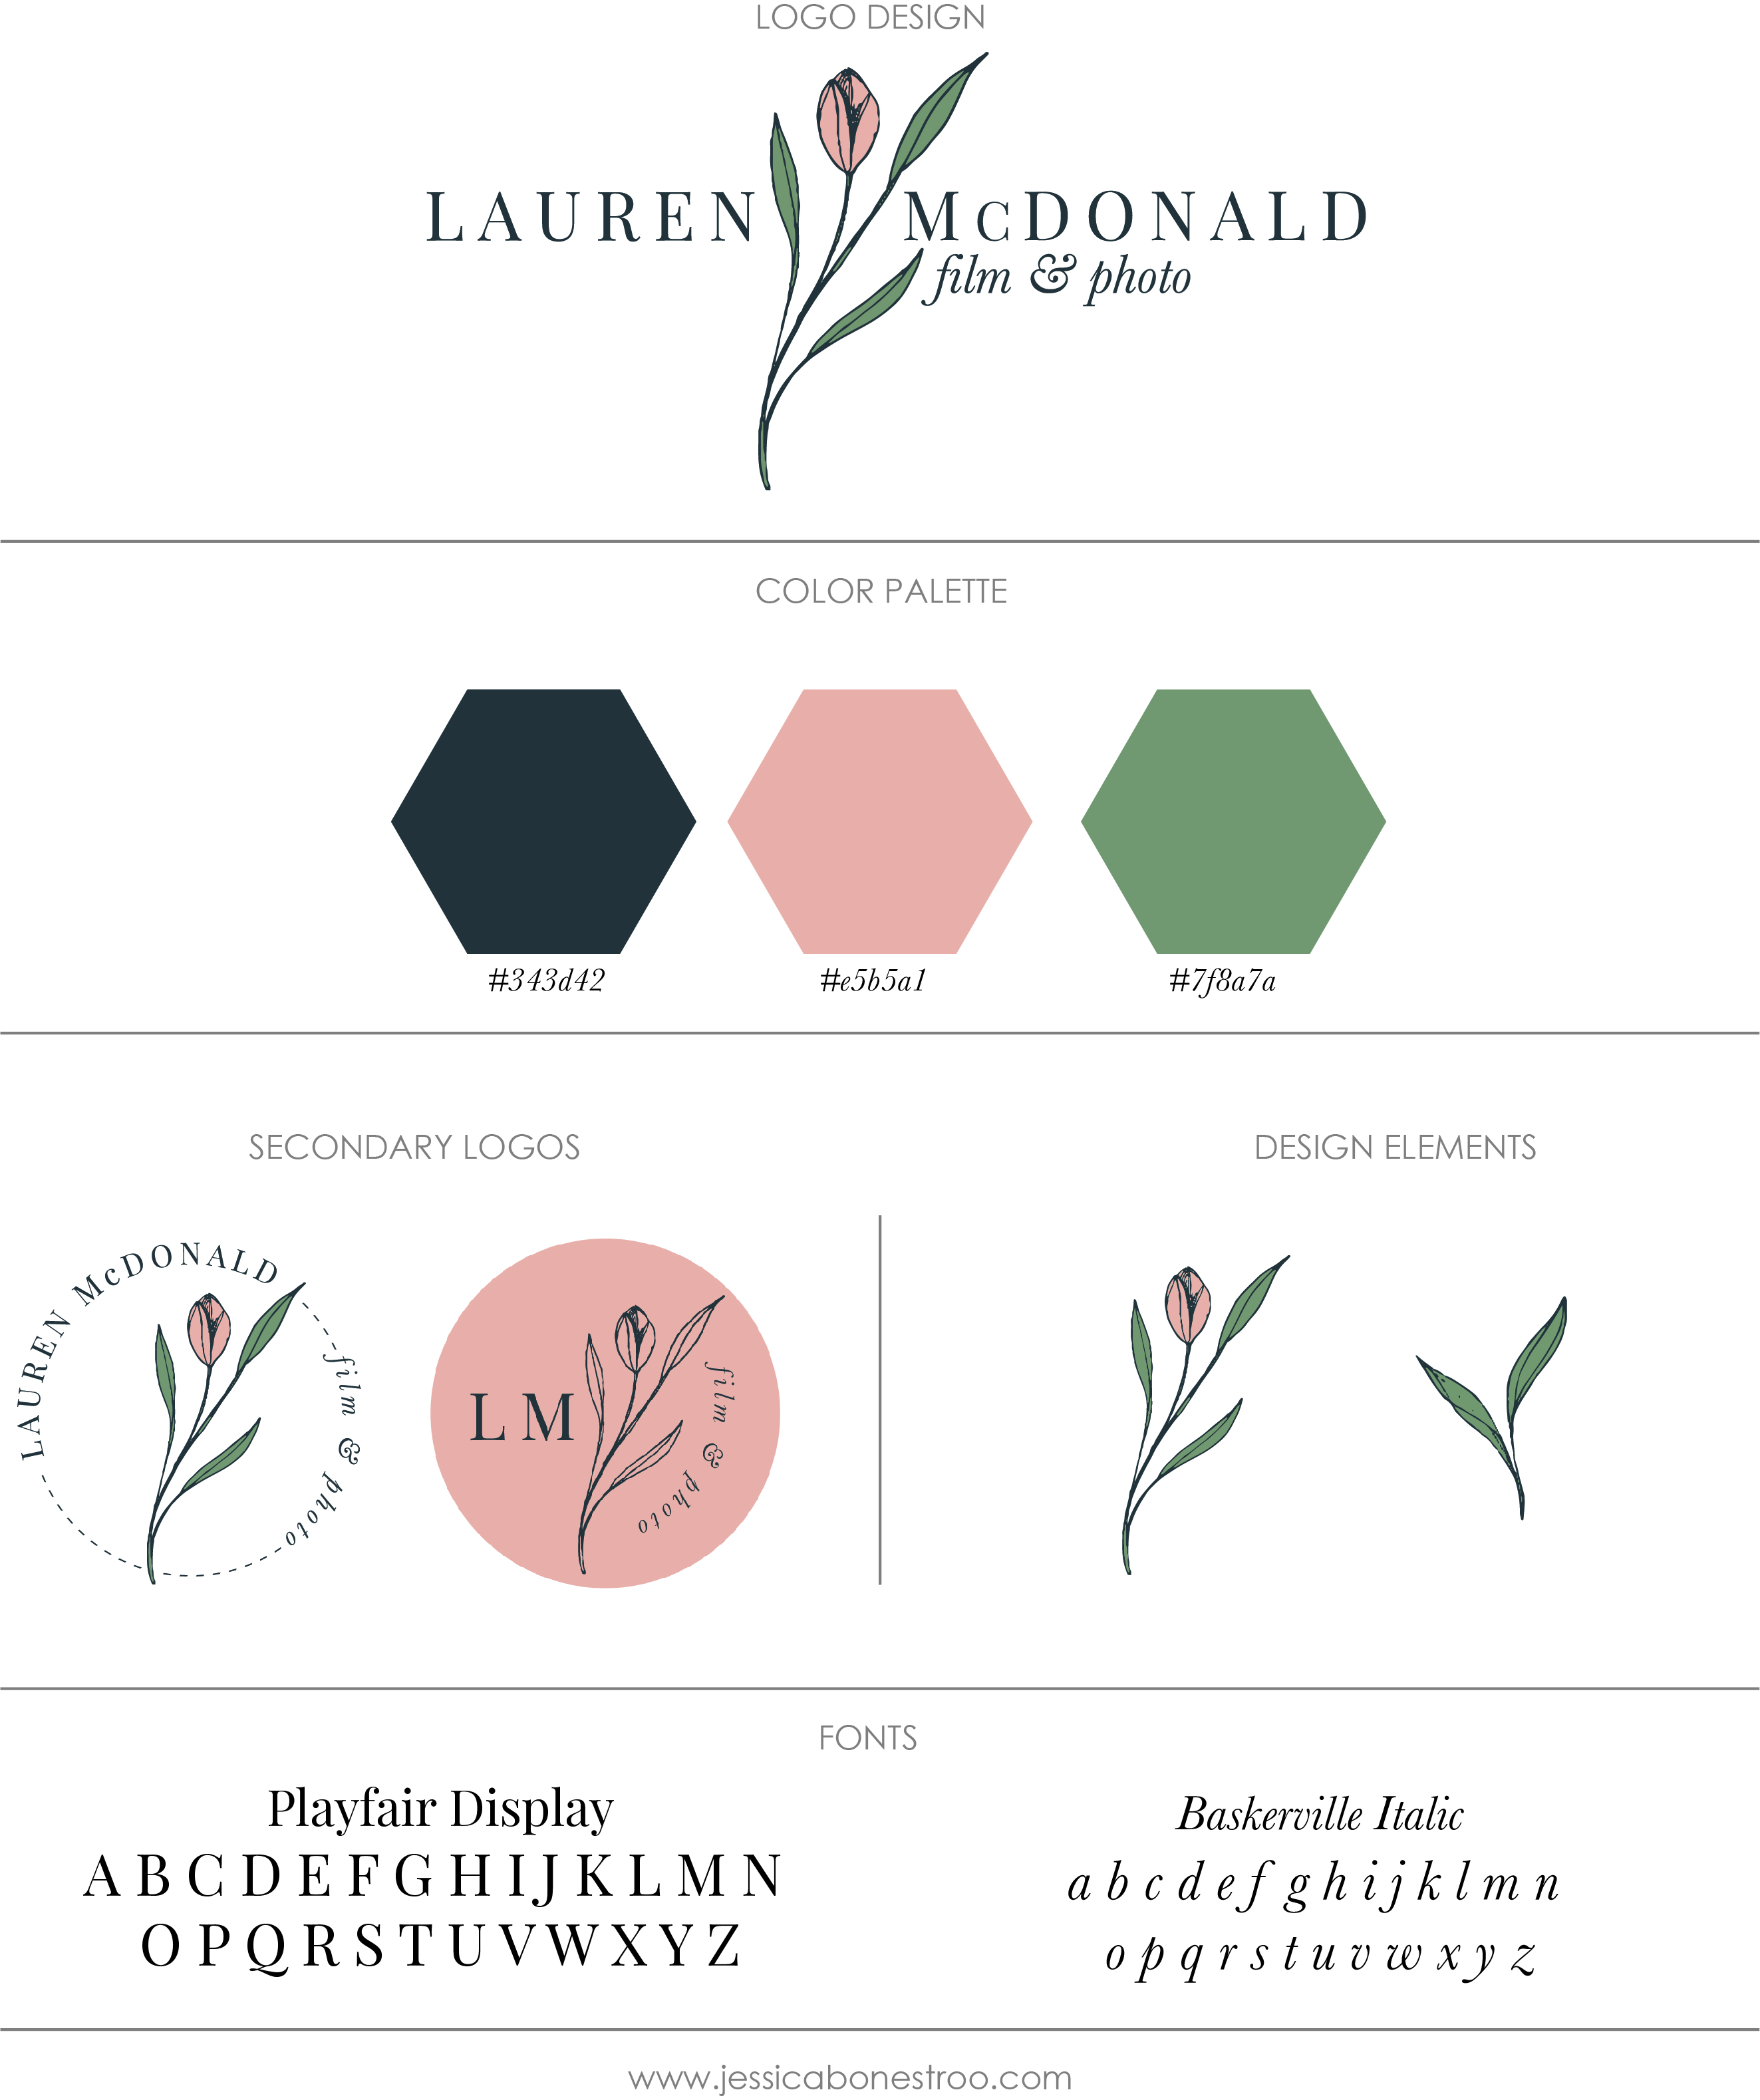 Lauren McDonald Film + Photo Logo redesign